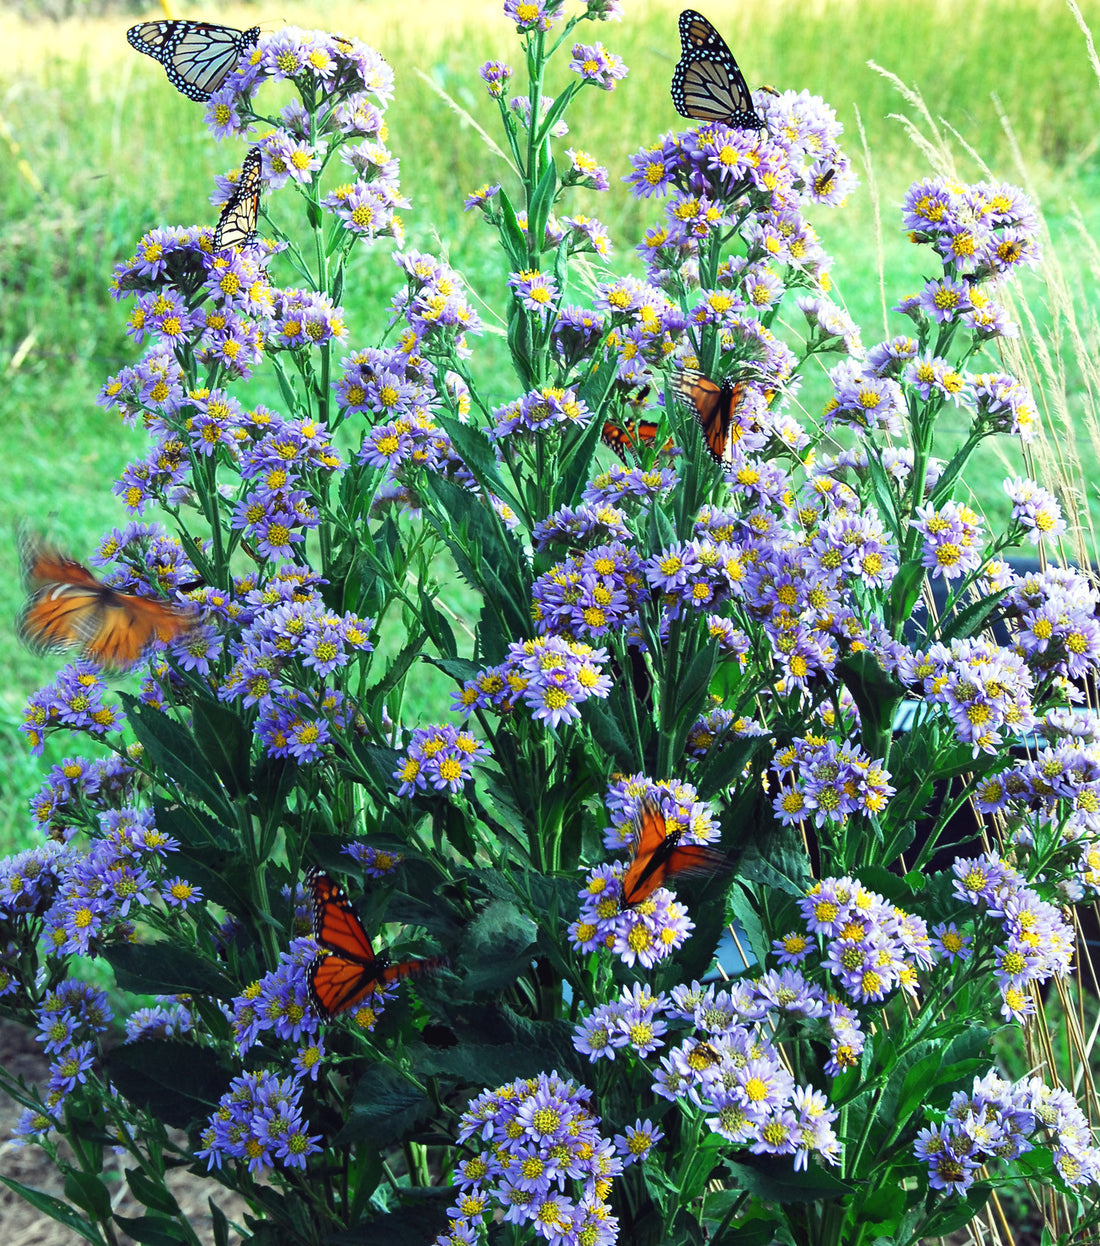 Growing a Butterfly Garden- Easy Plants for Butterfly Habitats